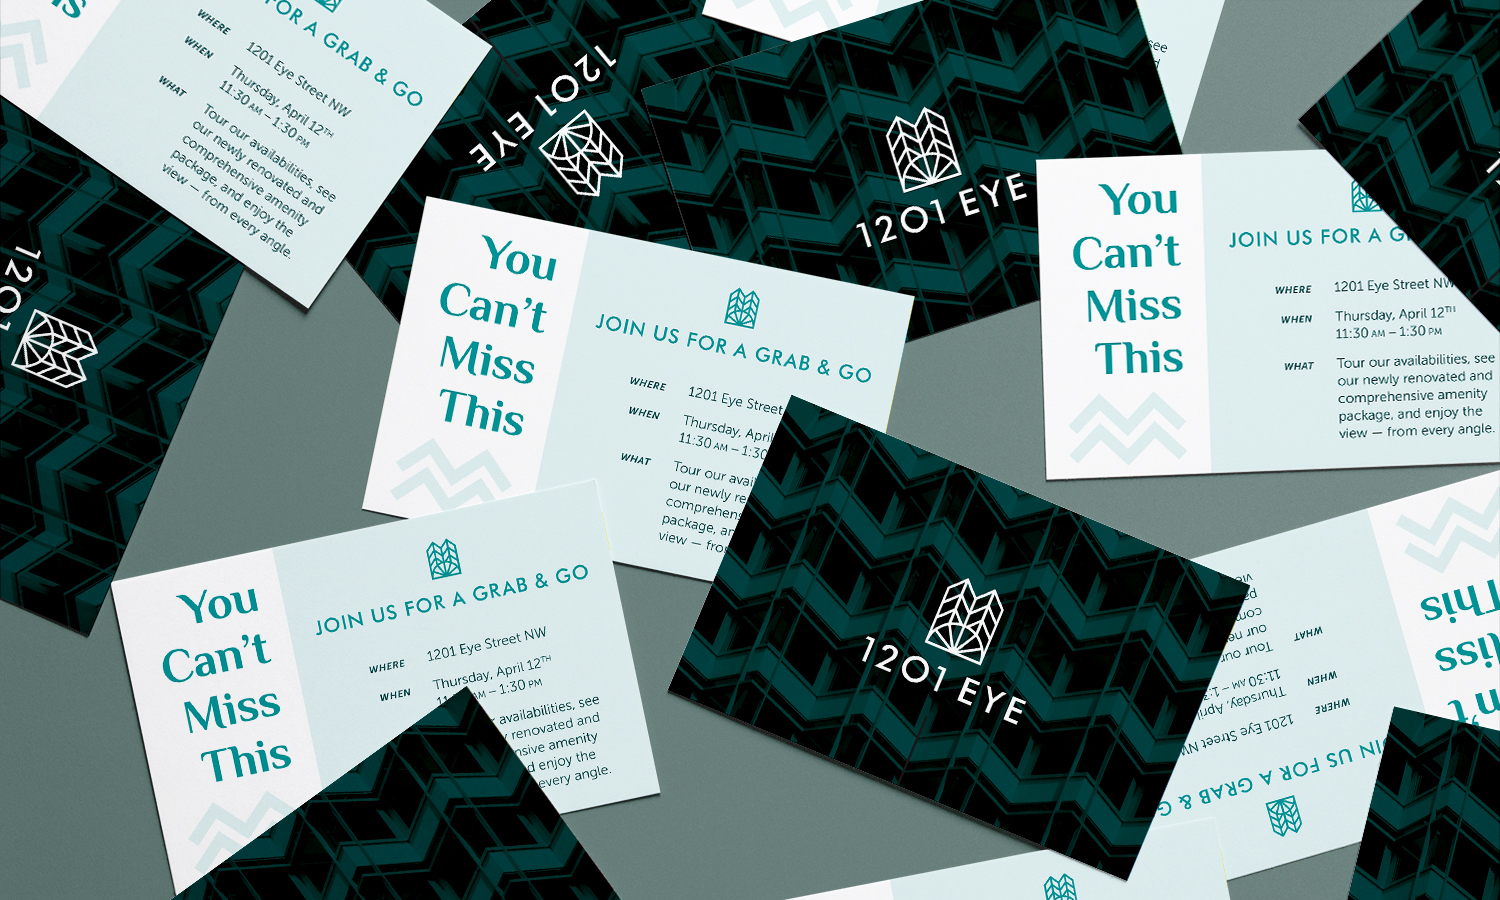 1201 Eye event invite